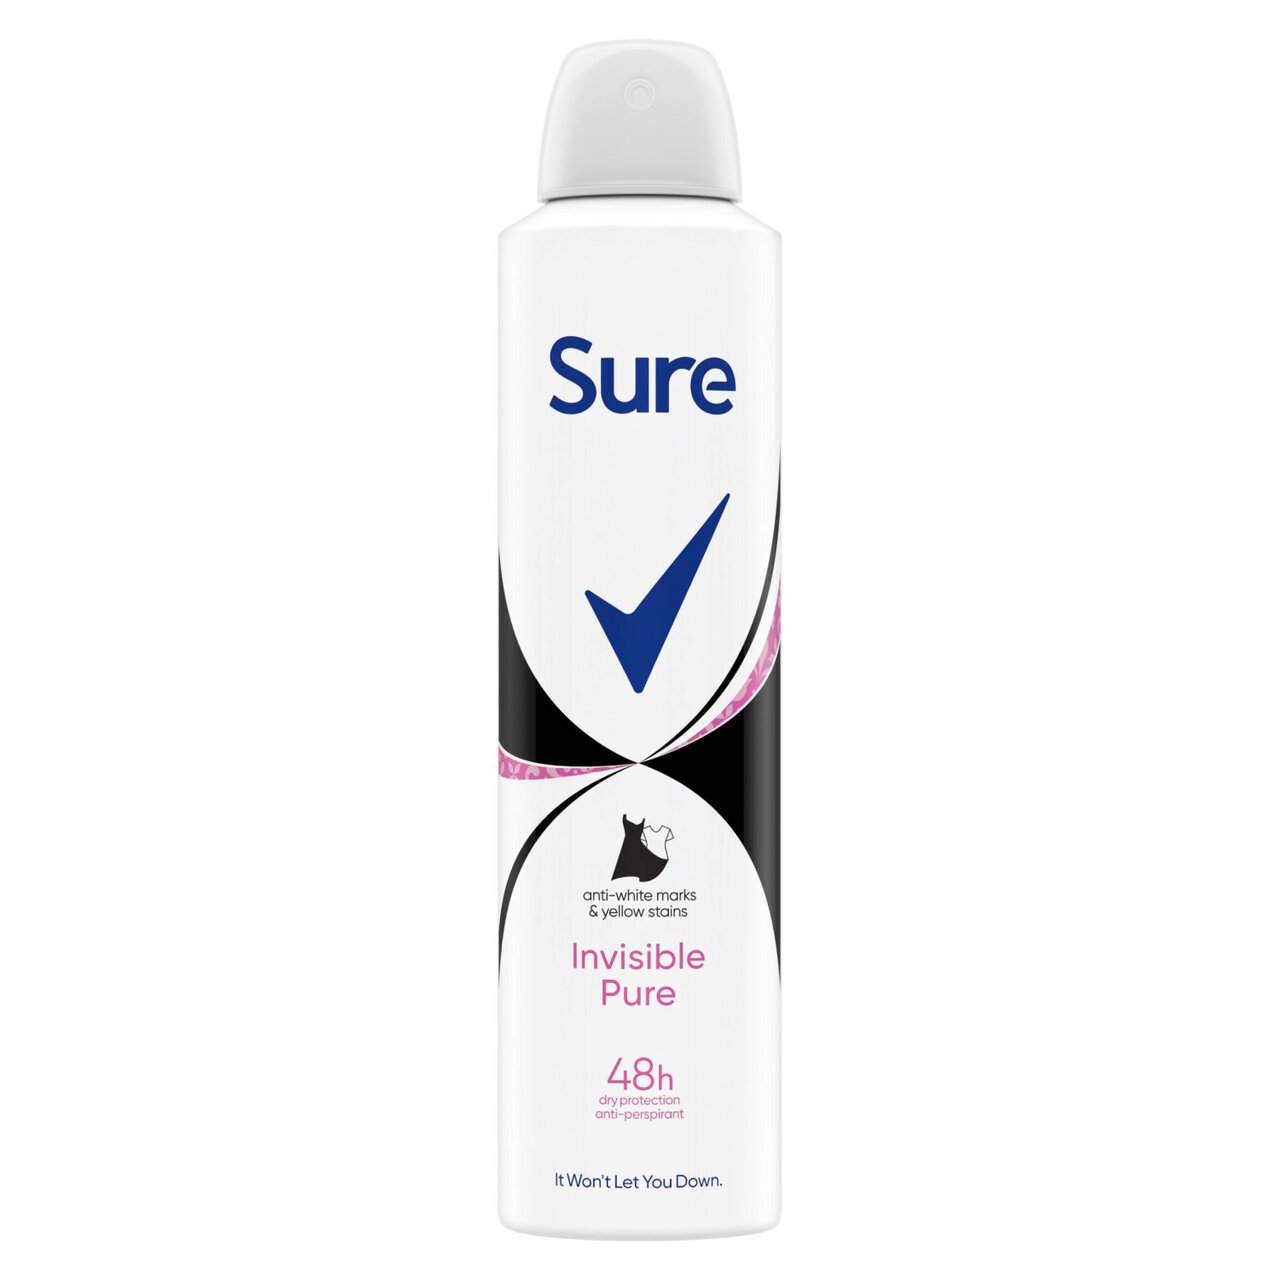 Sure Women Crystal Invisible Pure Spray Anti-Perspirant Deodorant 250ml